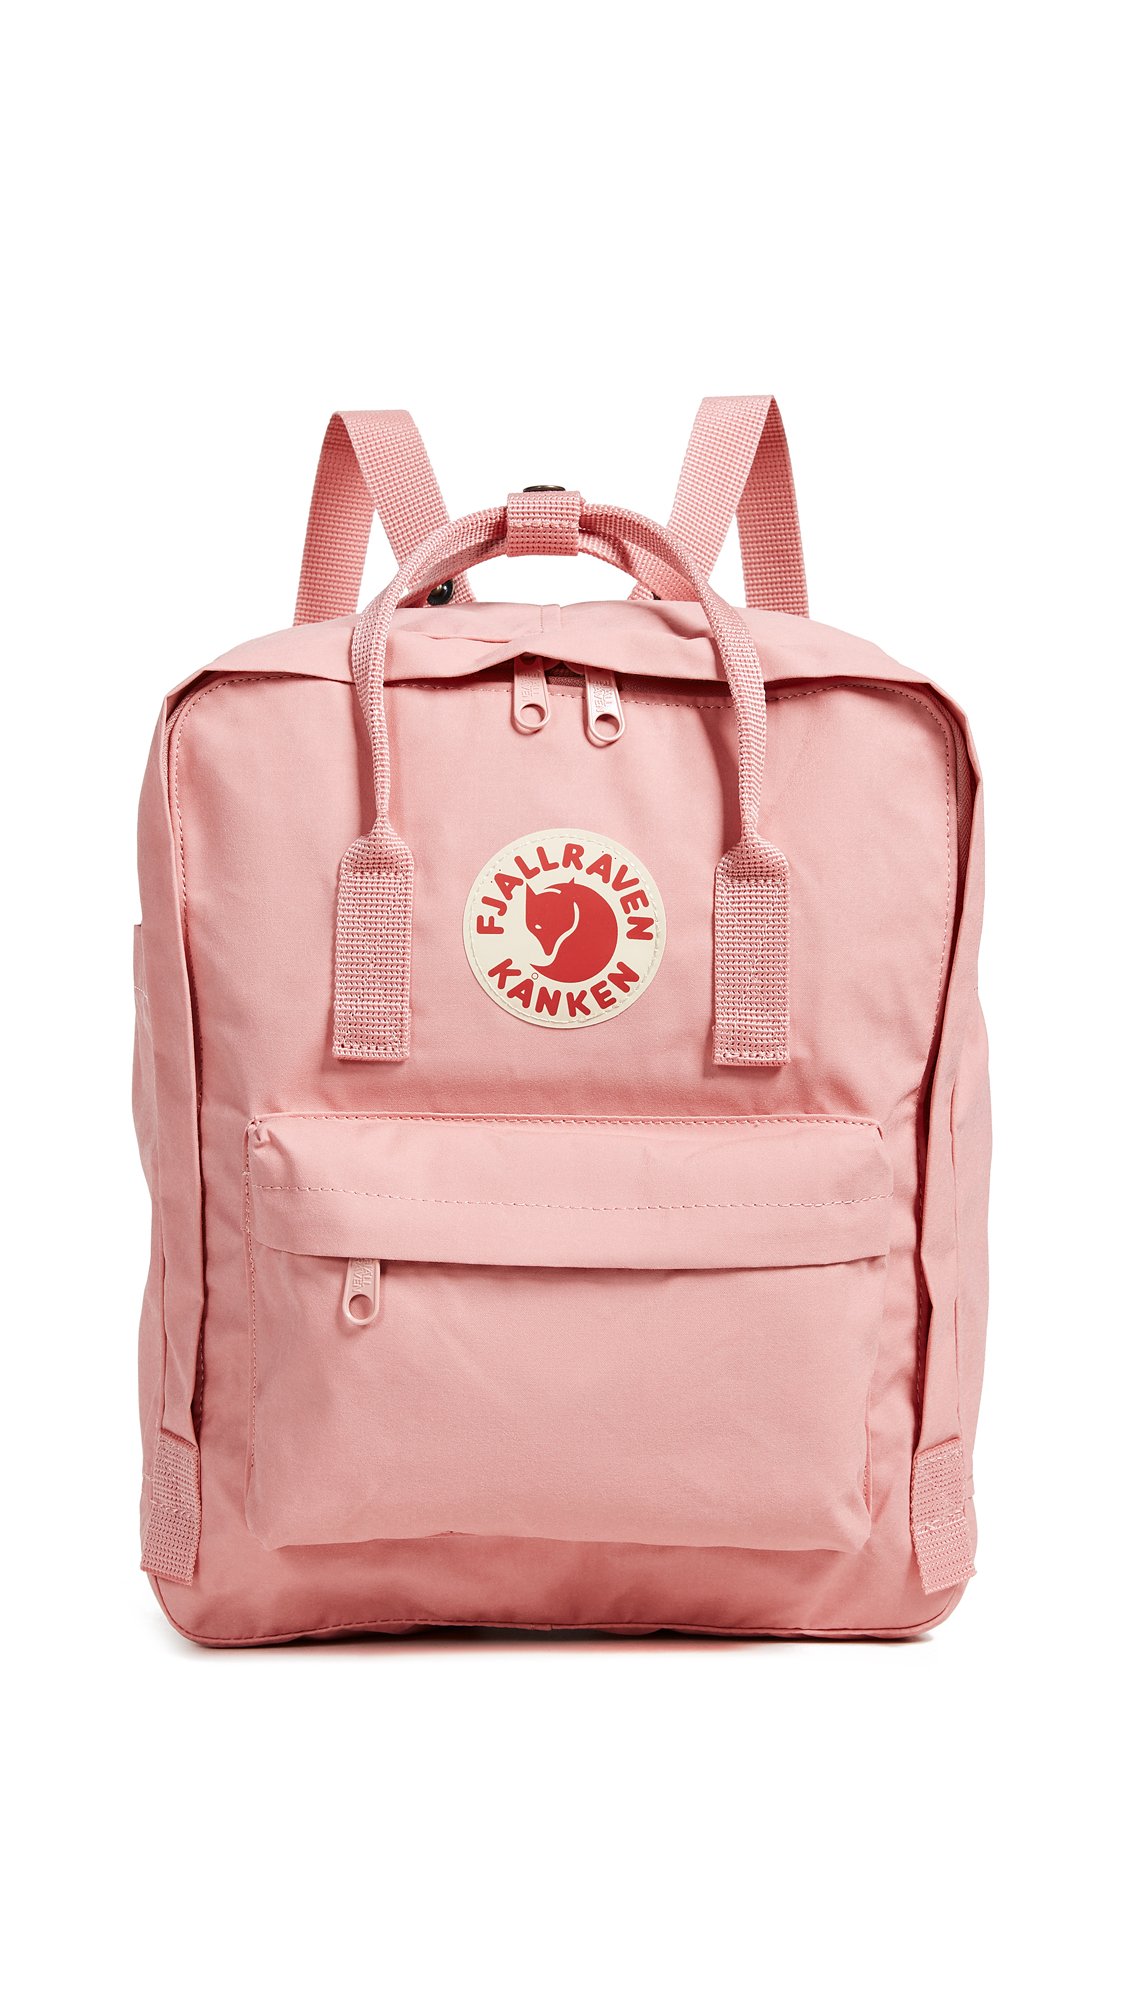 Fjallraven Women's Kanken Backpack, Pink, One Size $54